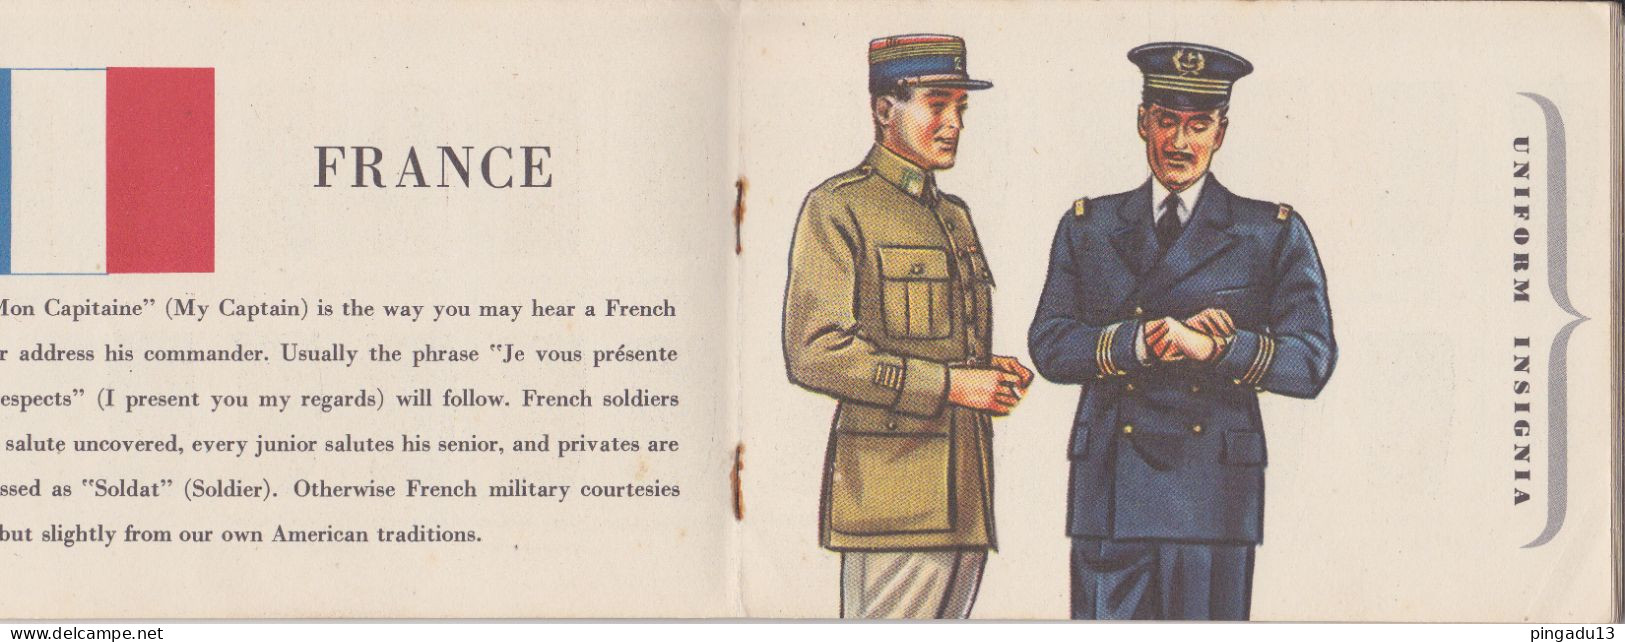 Fixe WW2 Pocket guide of Uniform Insignia China Poland France British Empire USSR USA